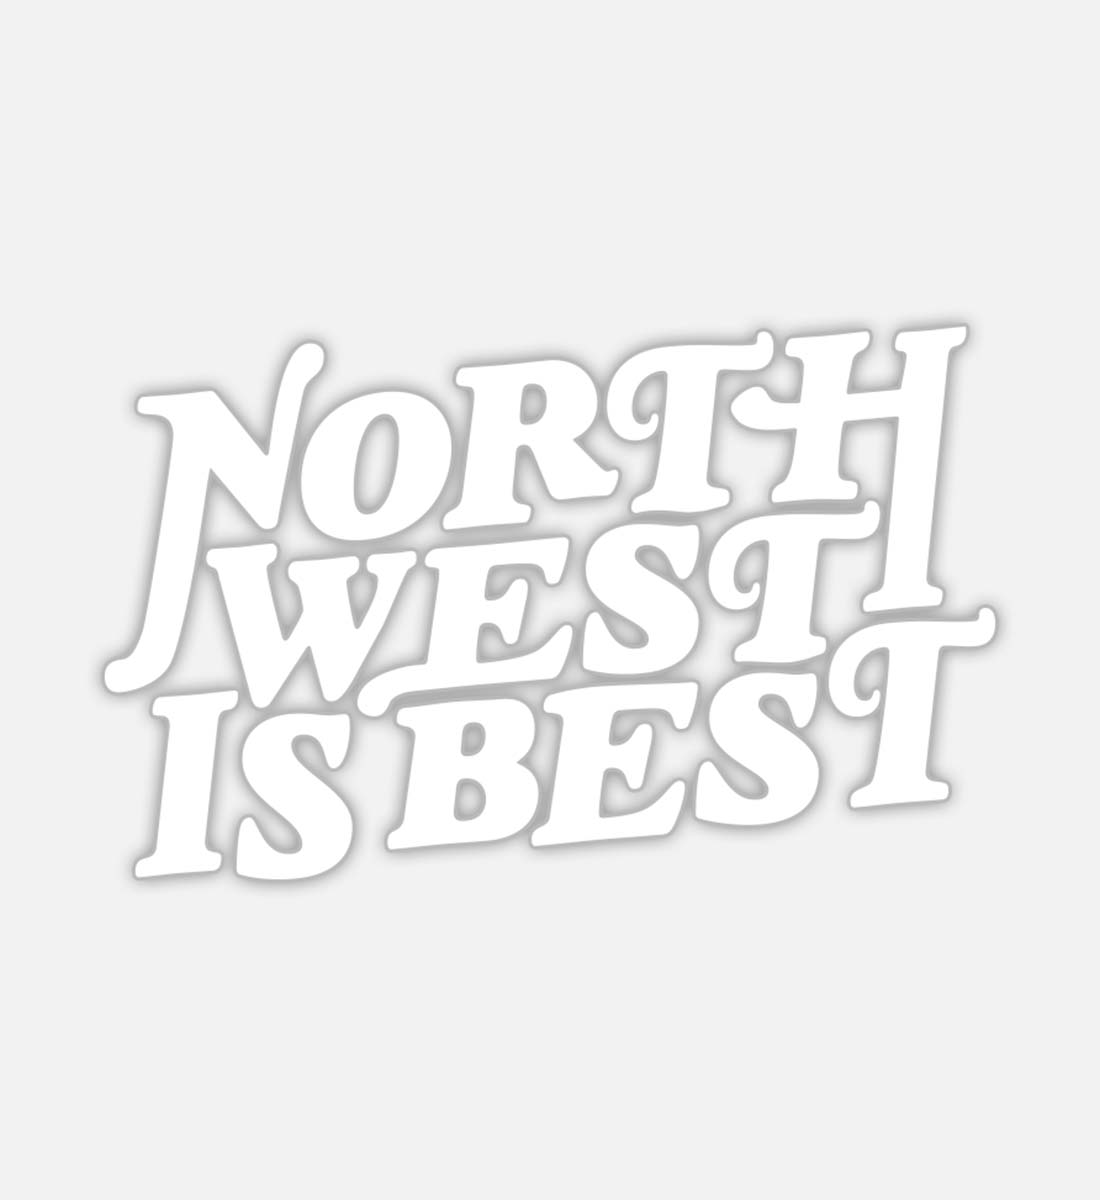 North West is Best Vinyl Decal